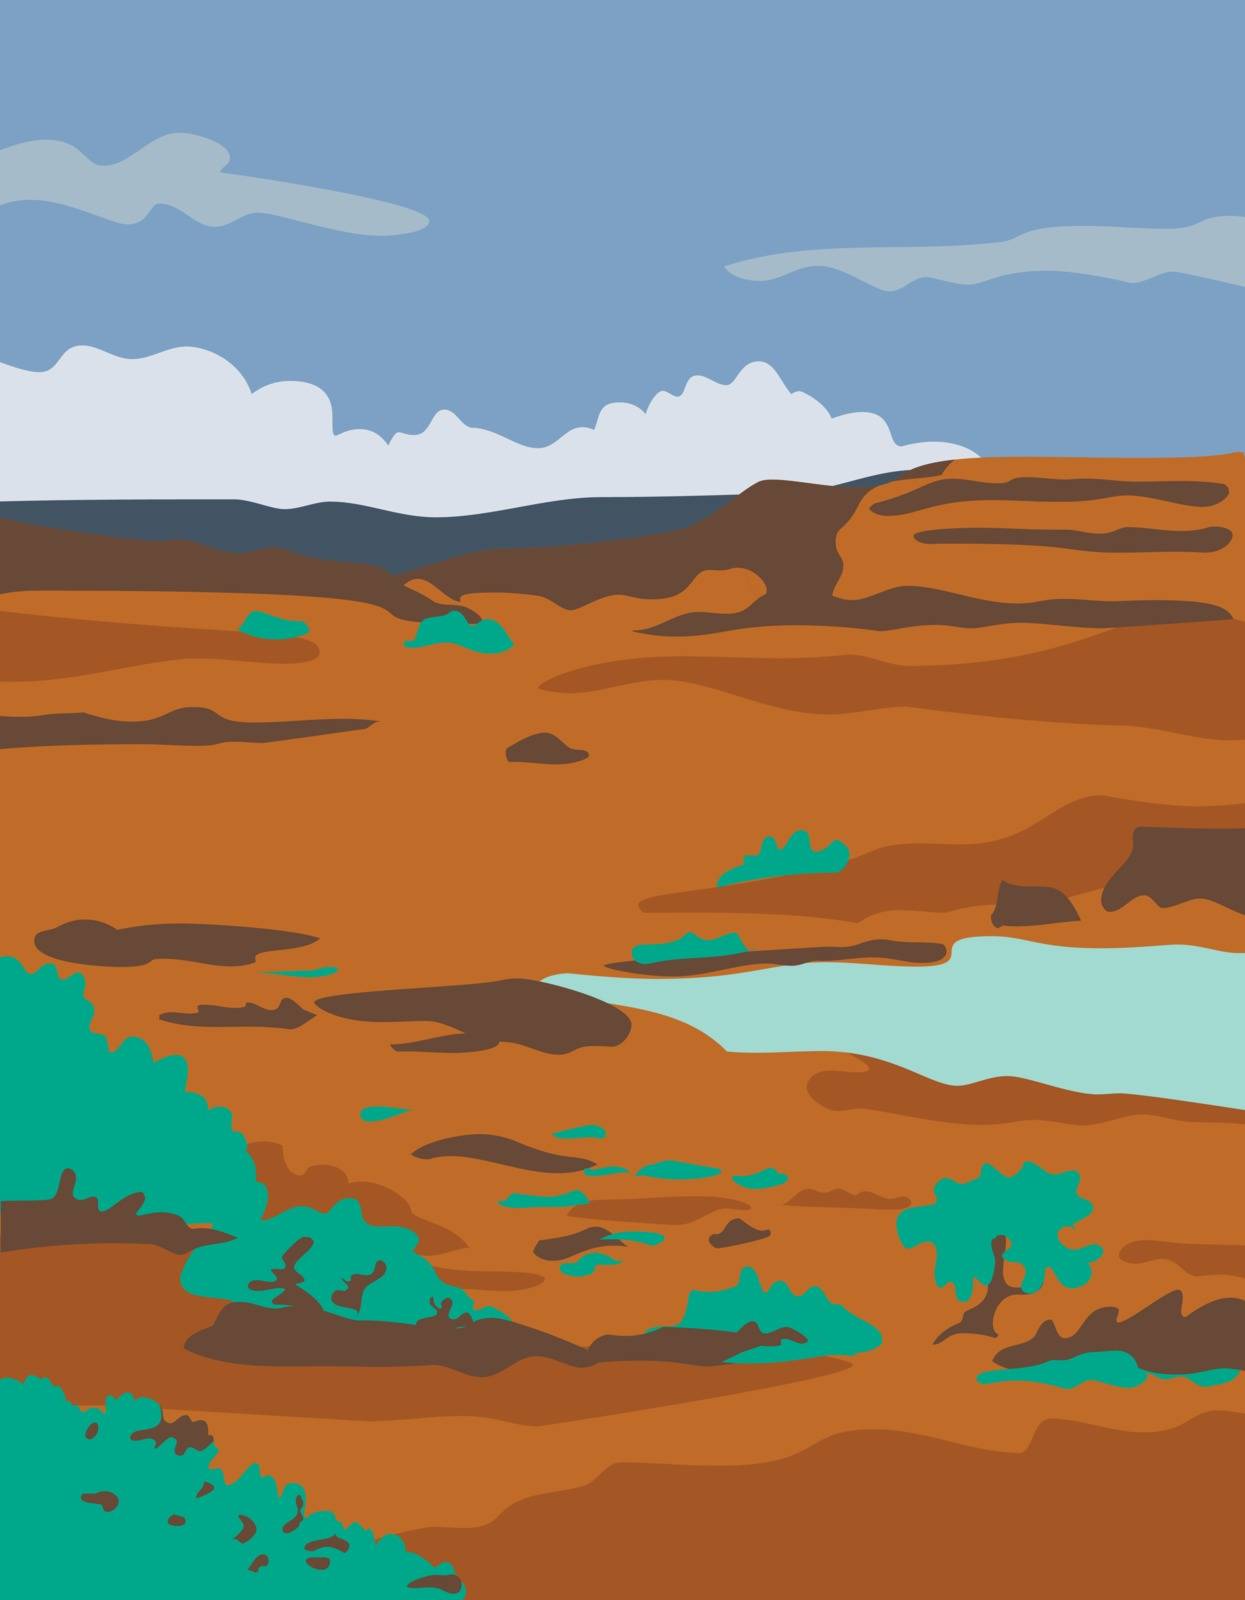 WPA style illustration of a columbian basin desert or arid steppe with water basin lake scenery set inside rectangle shape. 